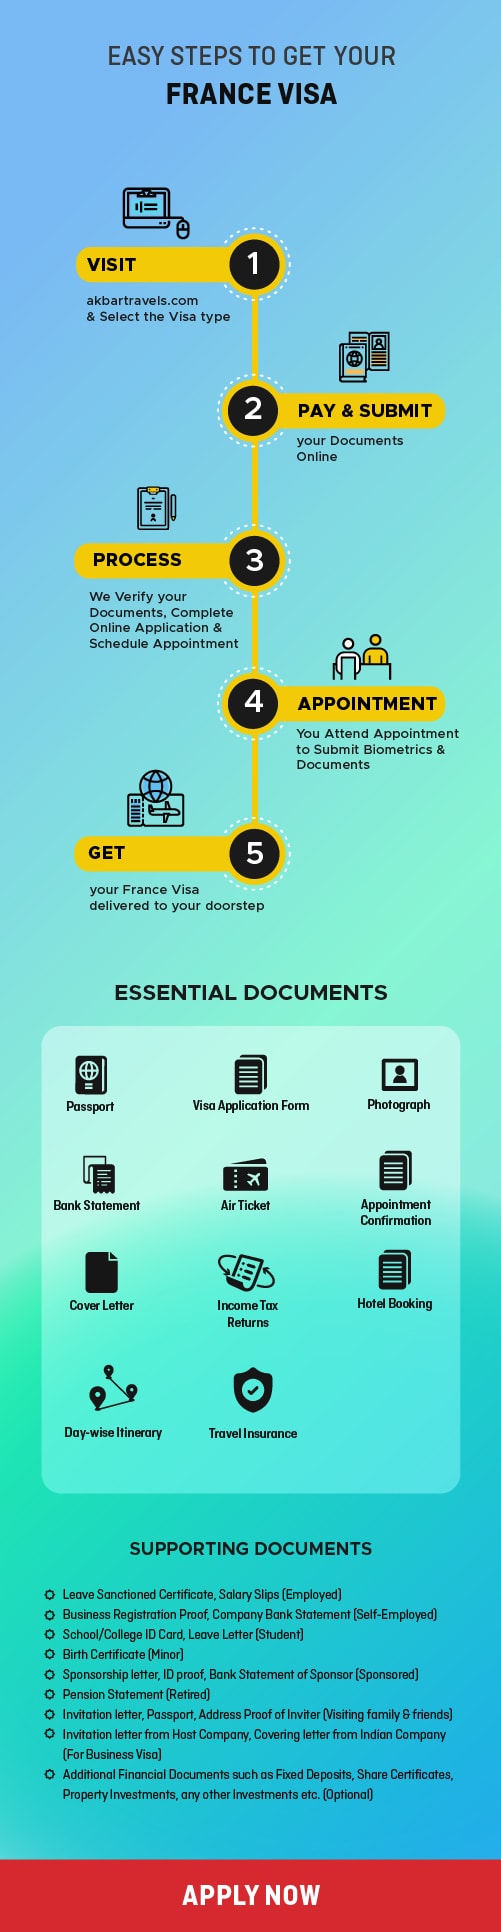 France Visa process and requirements